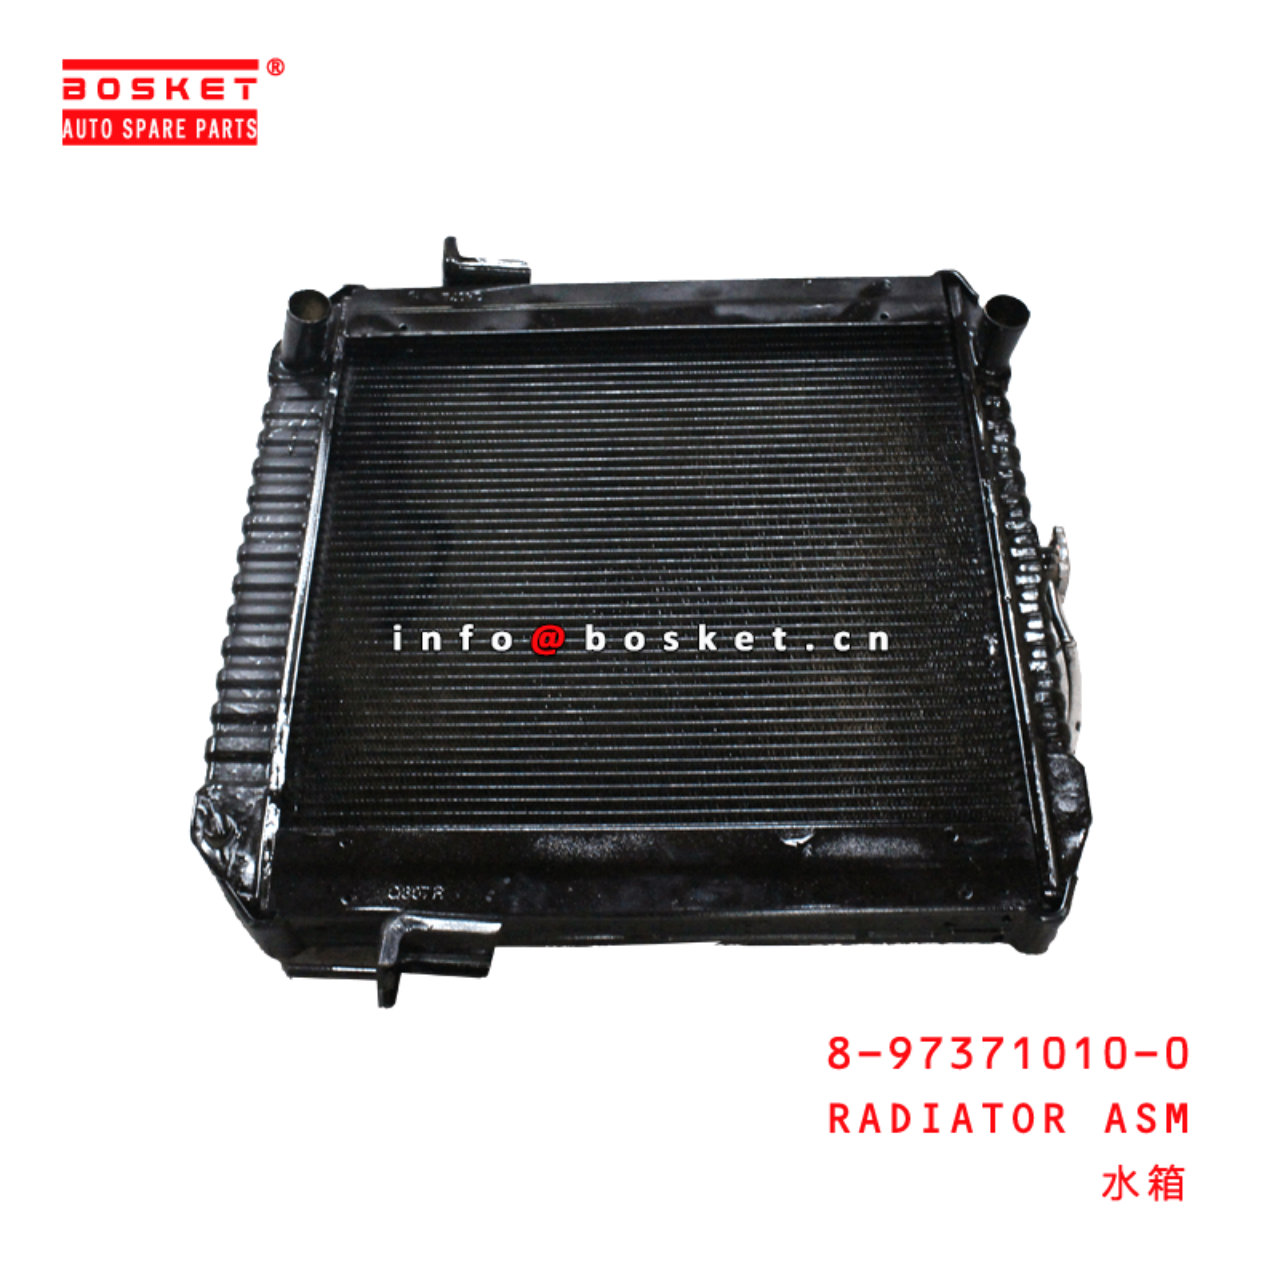  8-97371010-0 Radiator Assembly 8973710100 Suitable for ISUZU NPR 4HG1 